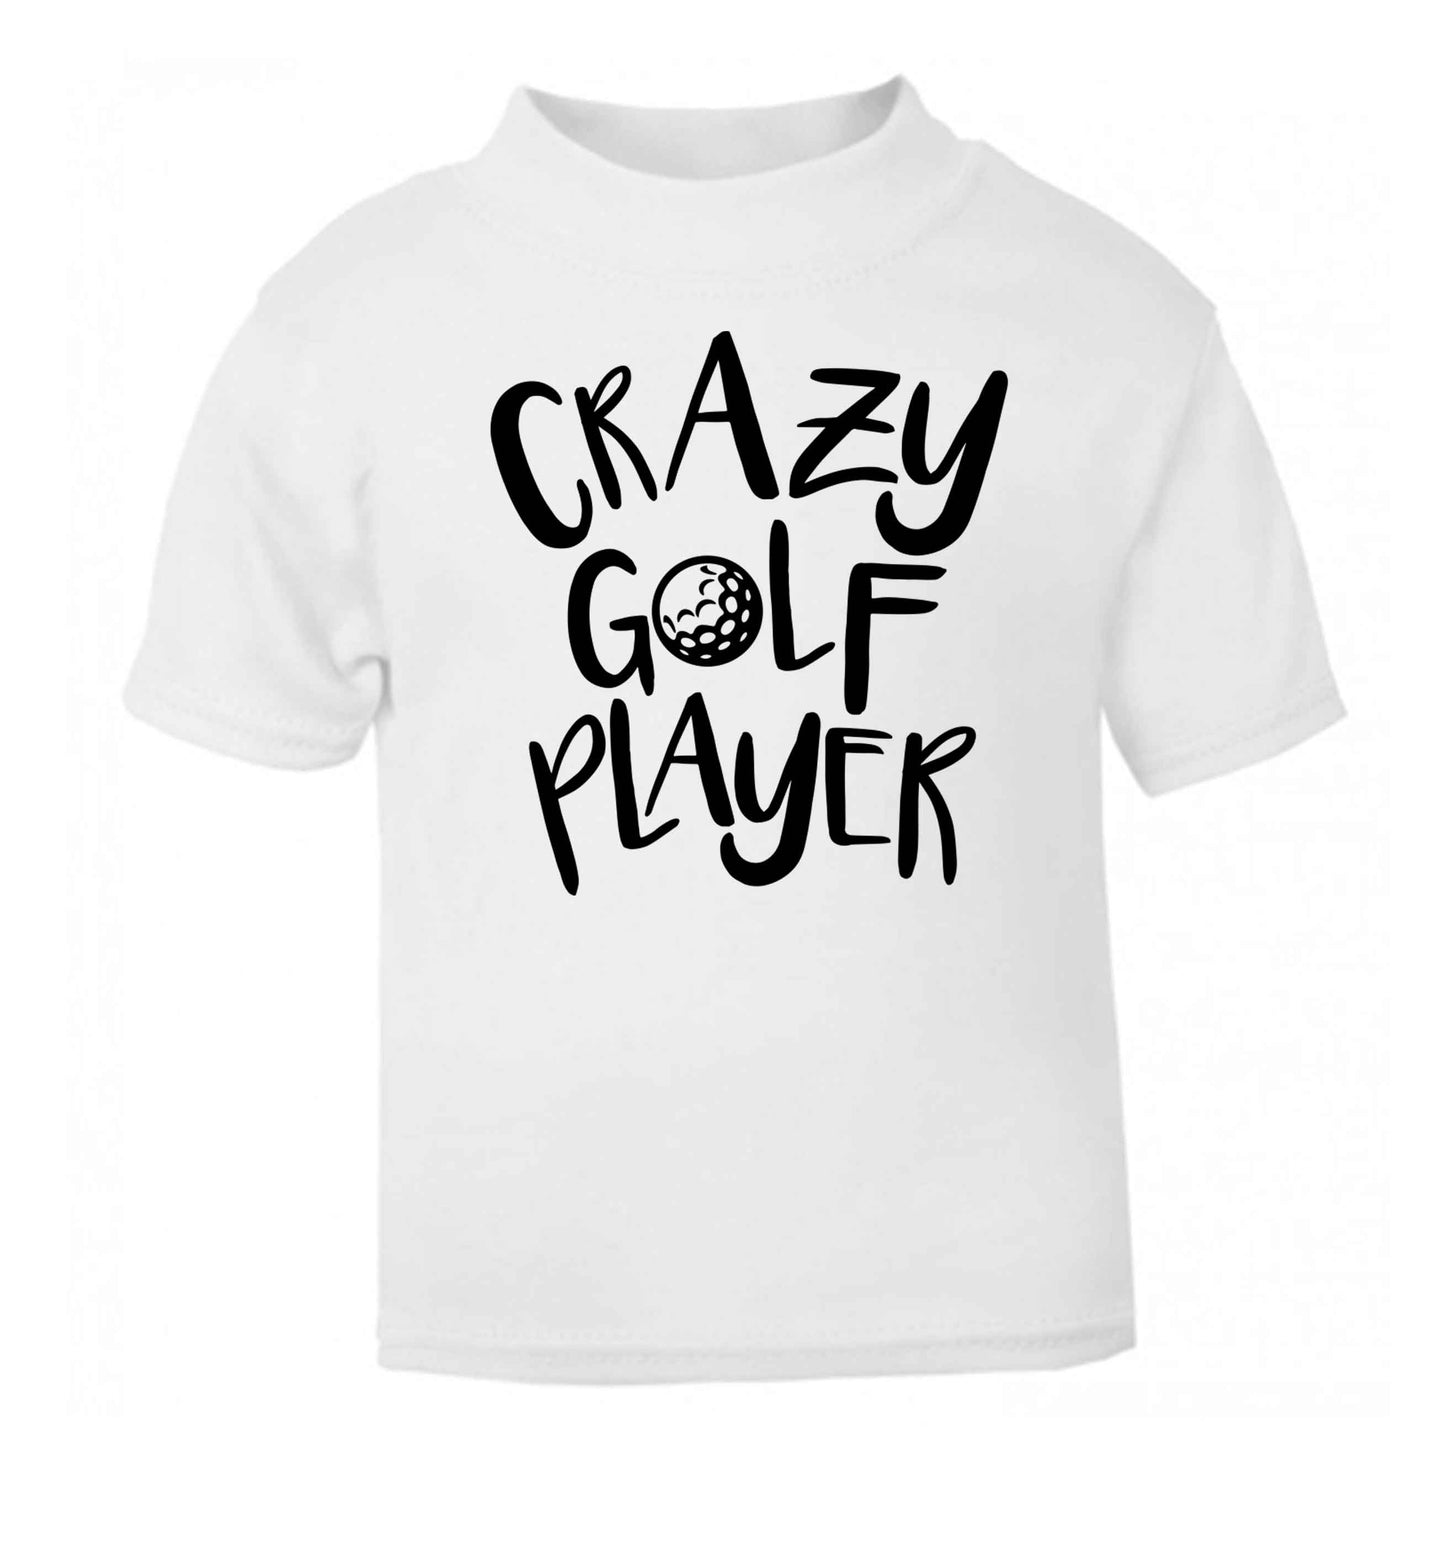 Crazy golf player white Baby Toddler Tshirt 2 Years